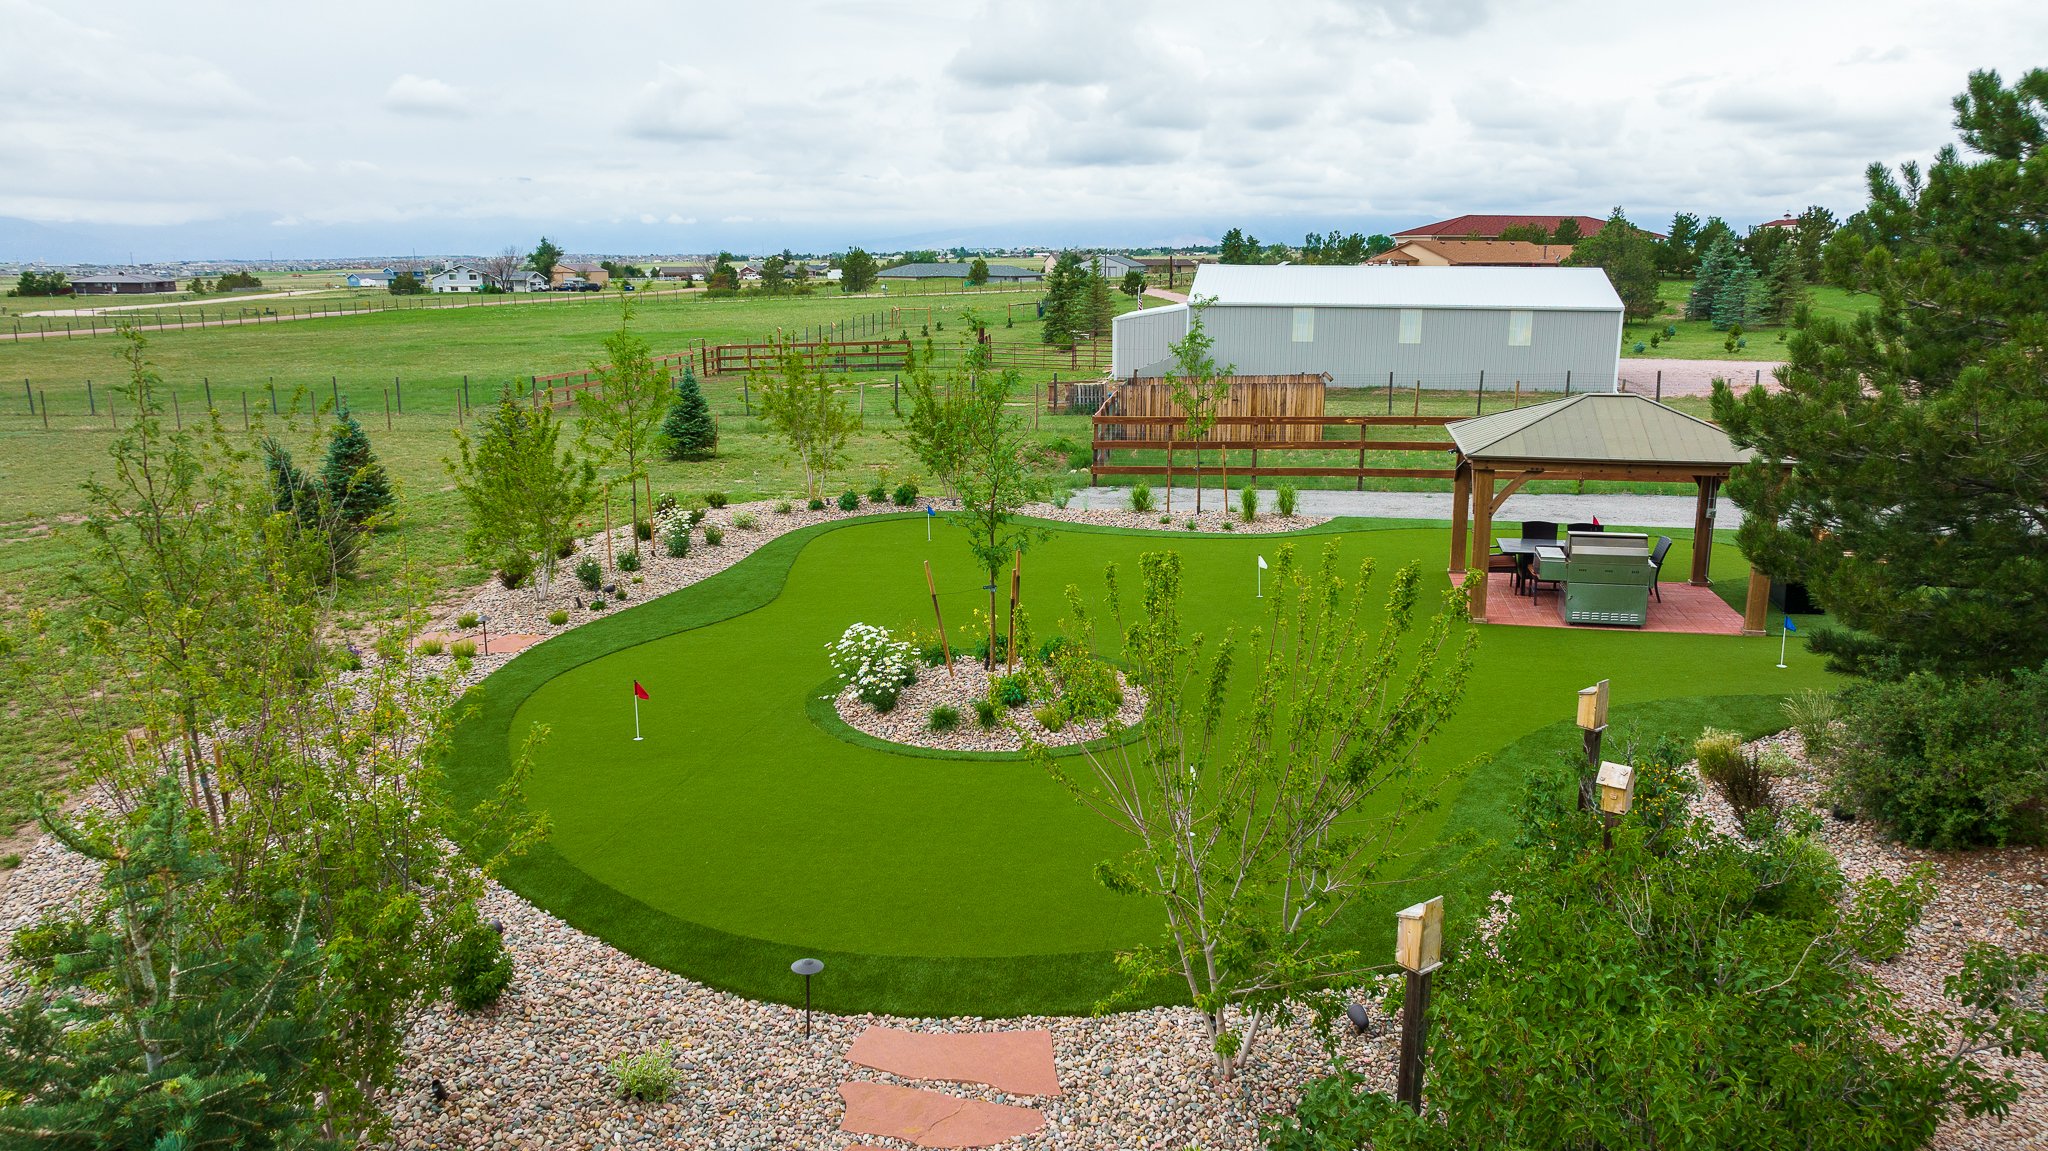 Golf course with artificial turf in Castle Rock, Colorado